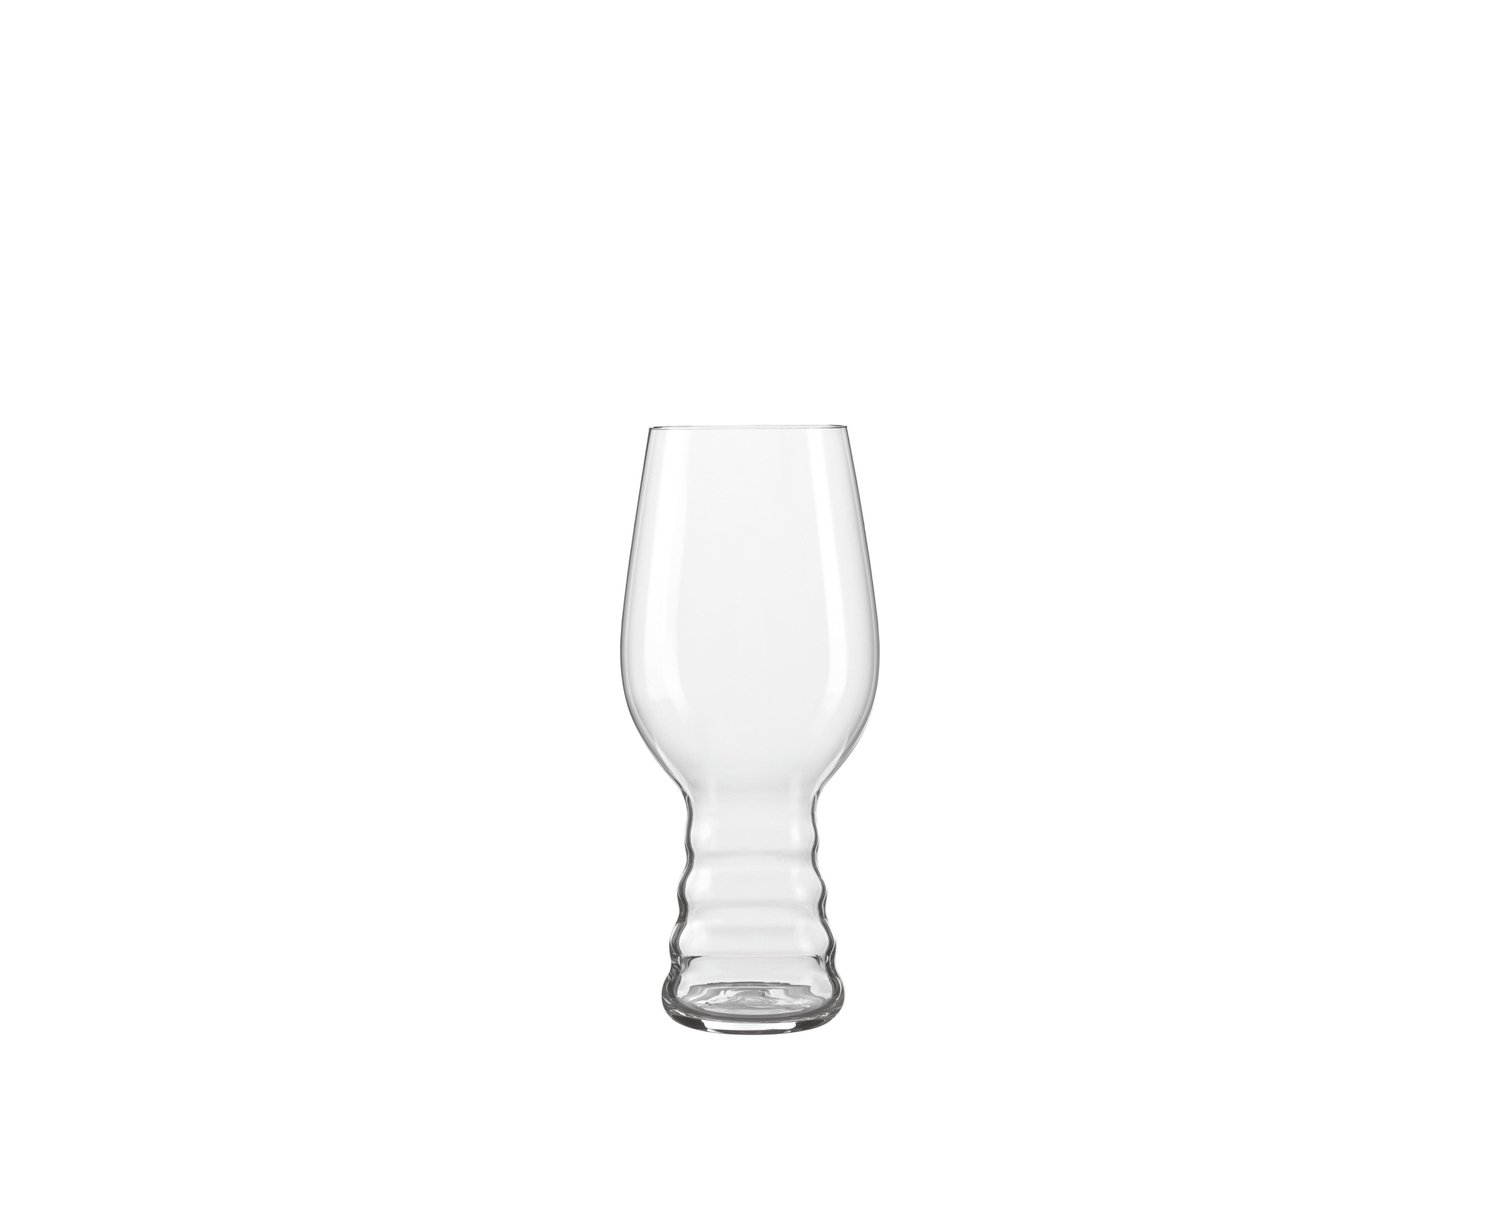 SPIEGELAU IPA Glass - Designed by Dogfish Head and Sierra Nevada